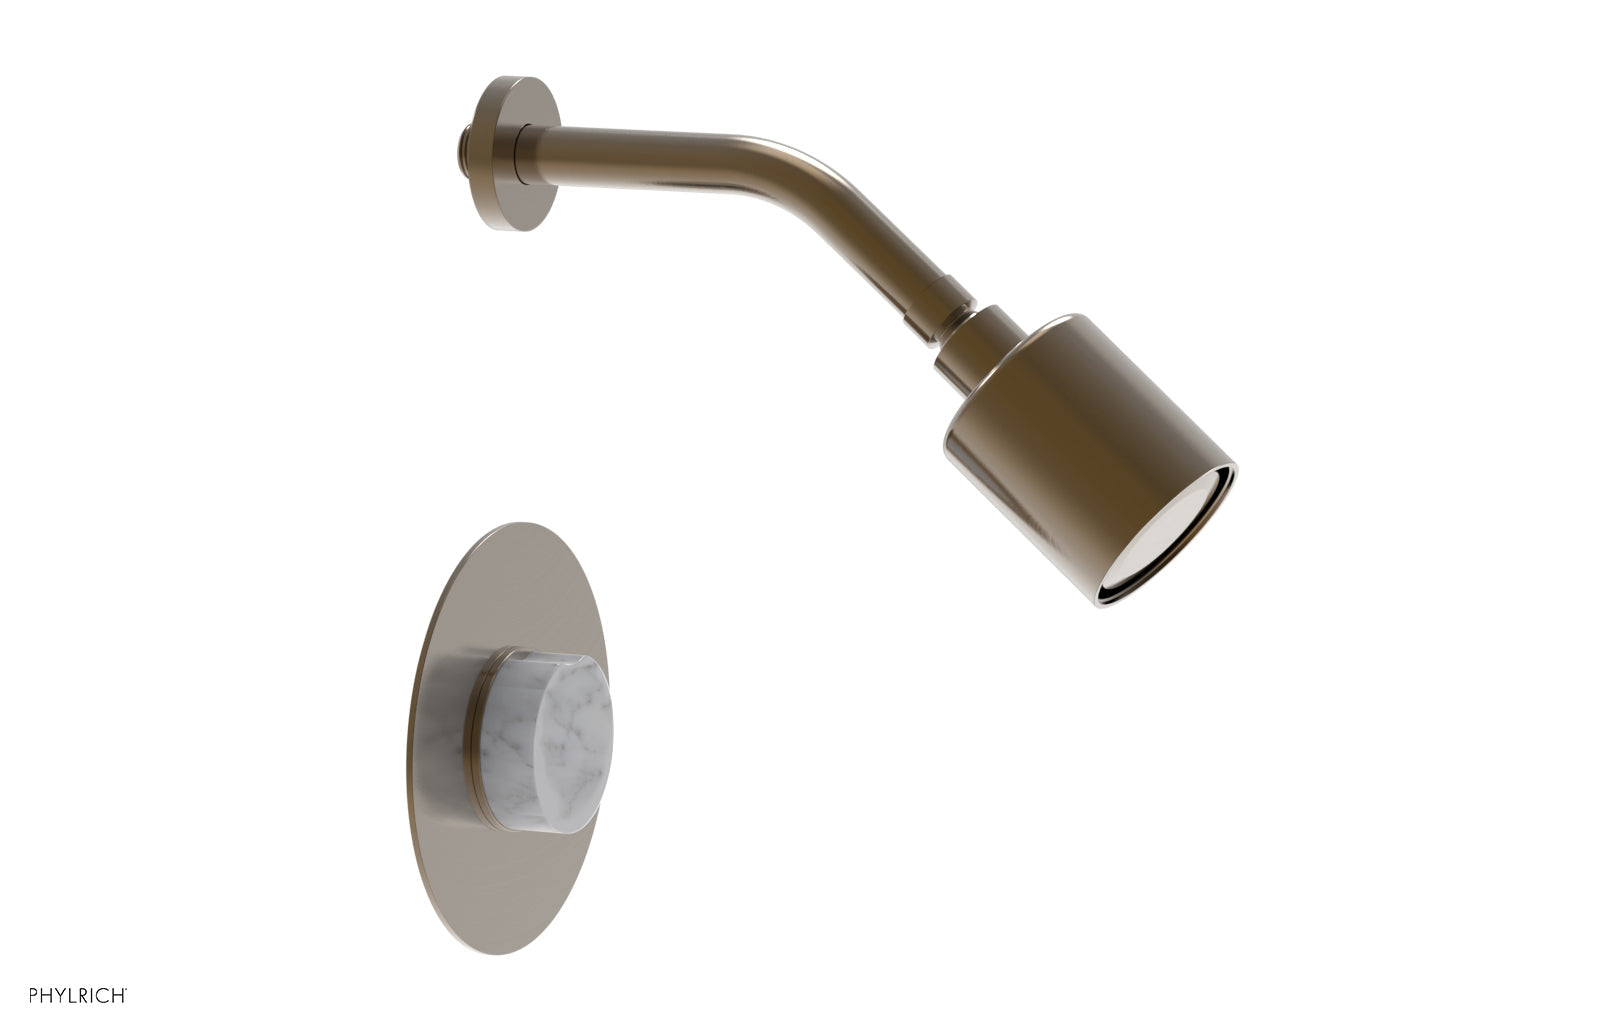 Phylrich CIRC Pressure Balance Shower Set - White Marble Handle